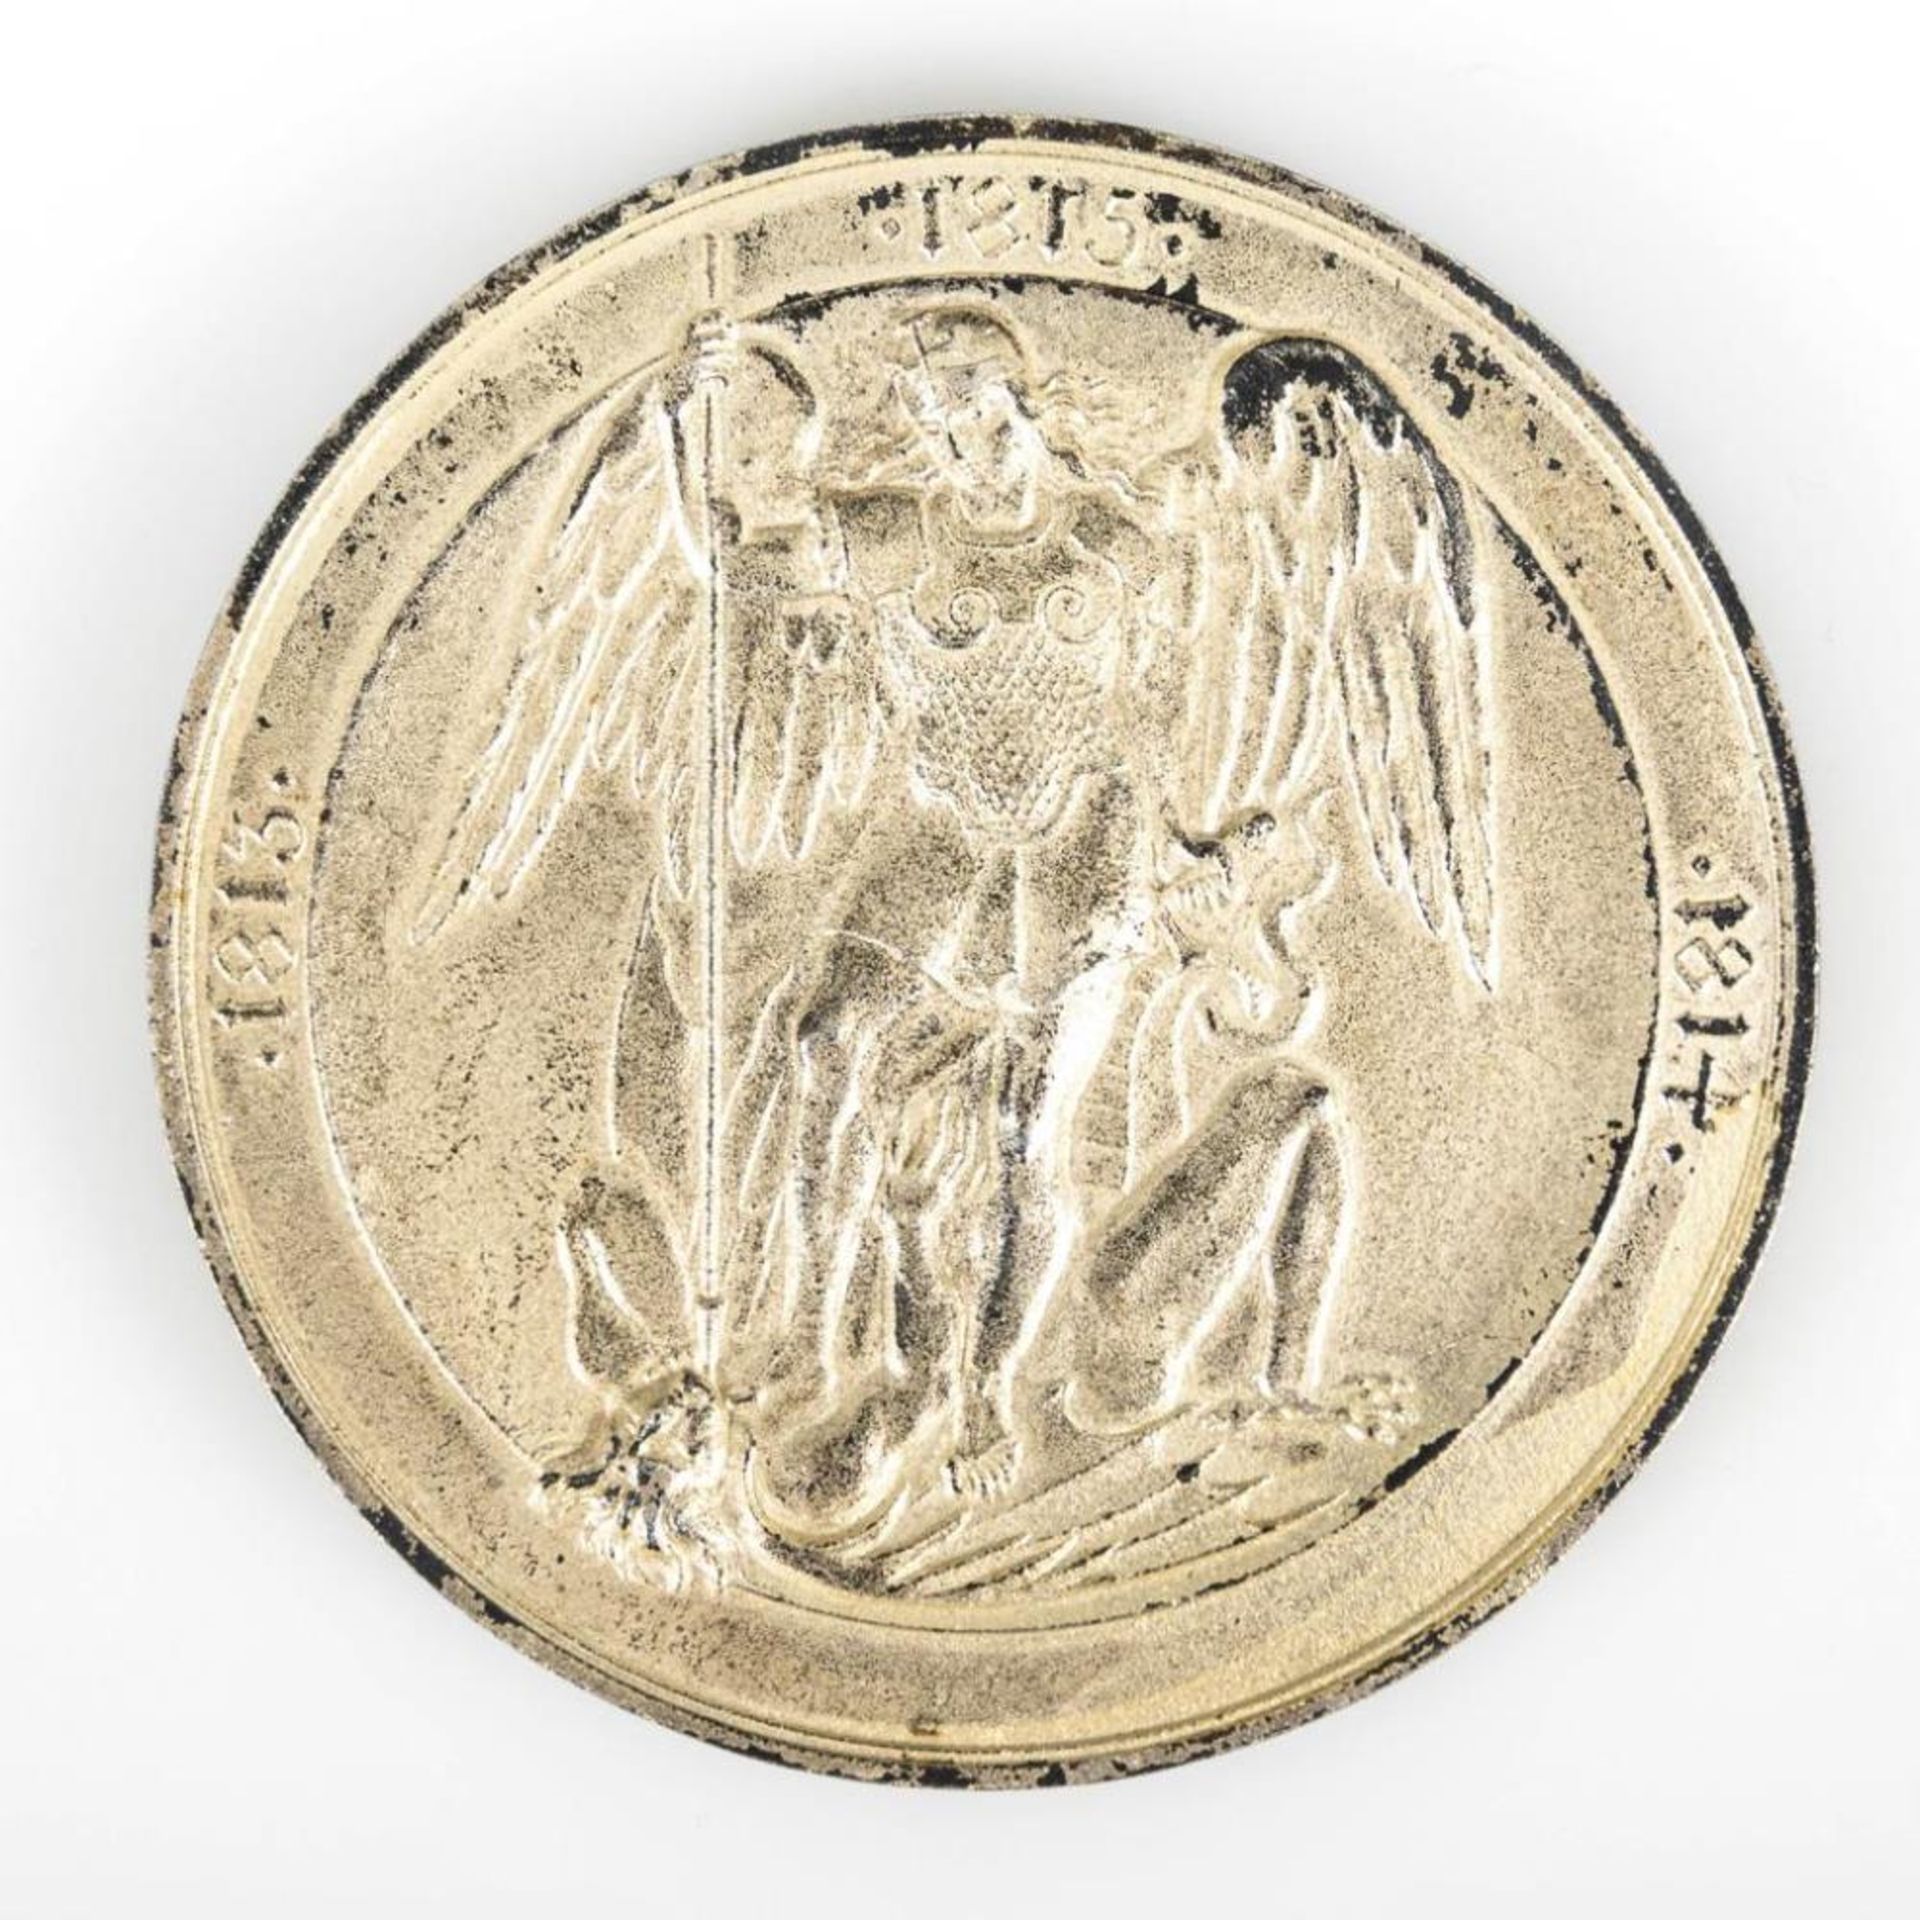 Versilberte Eisenguss-Medaille: Blücherehrung 1816. - Bild 2 aus 2